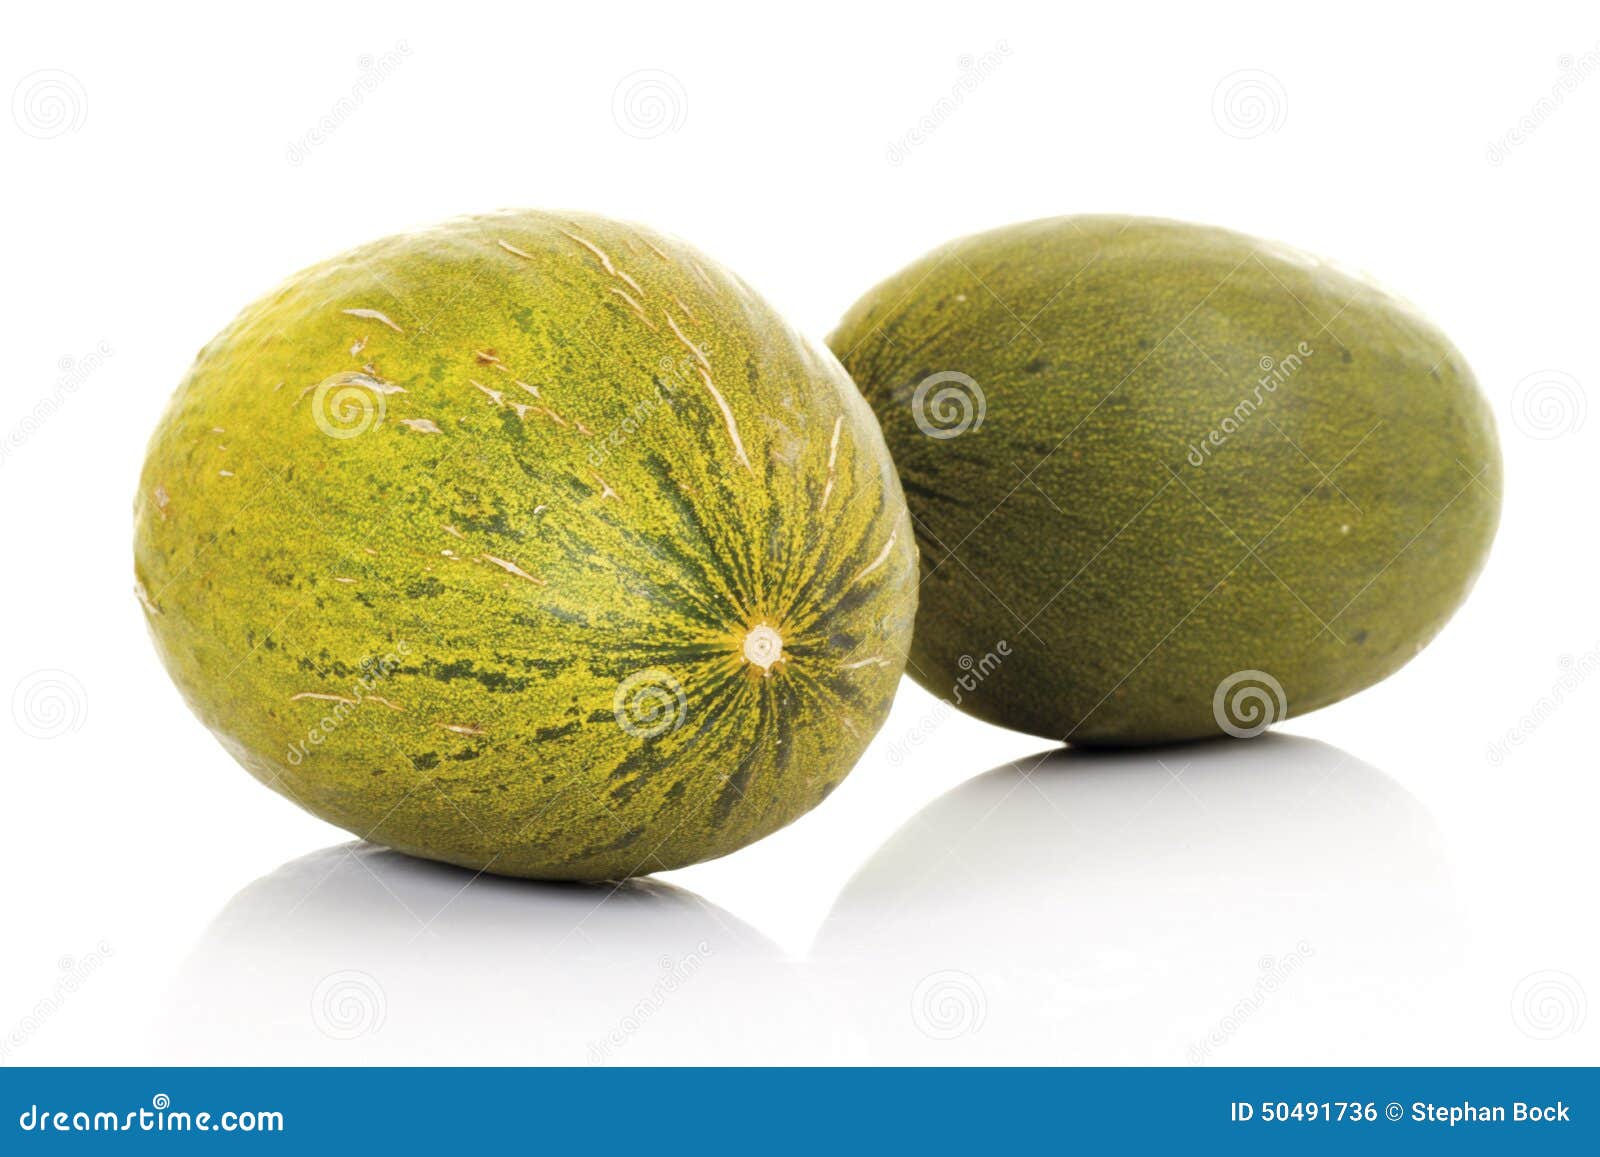 futuro melons, close-up